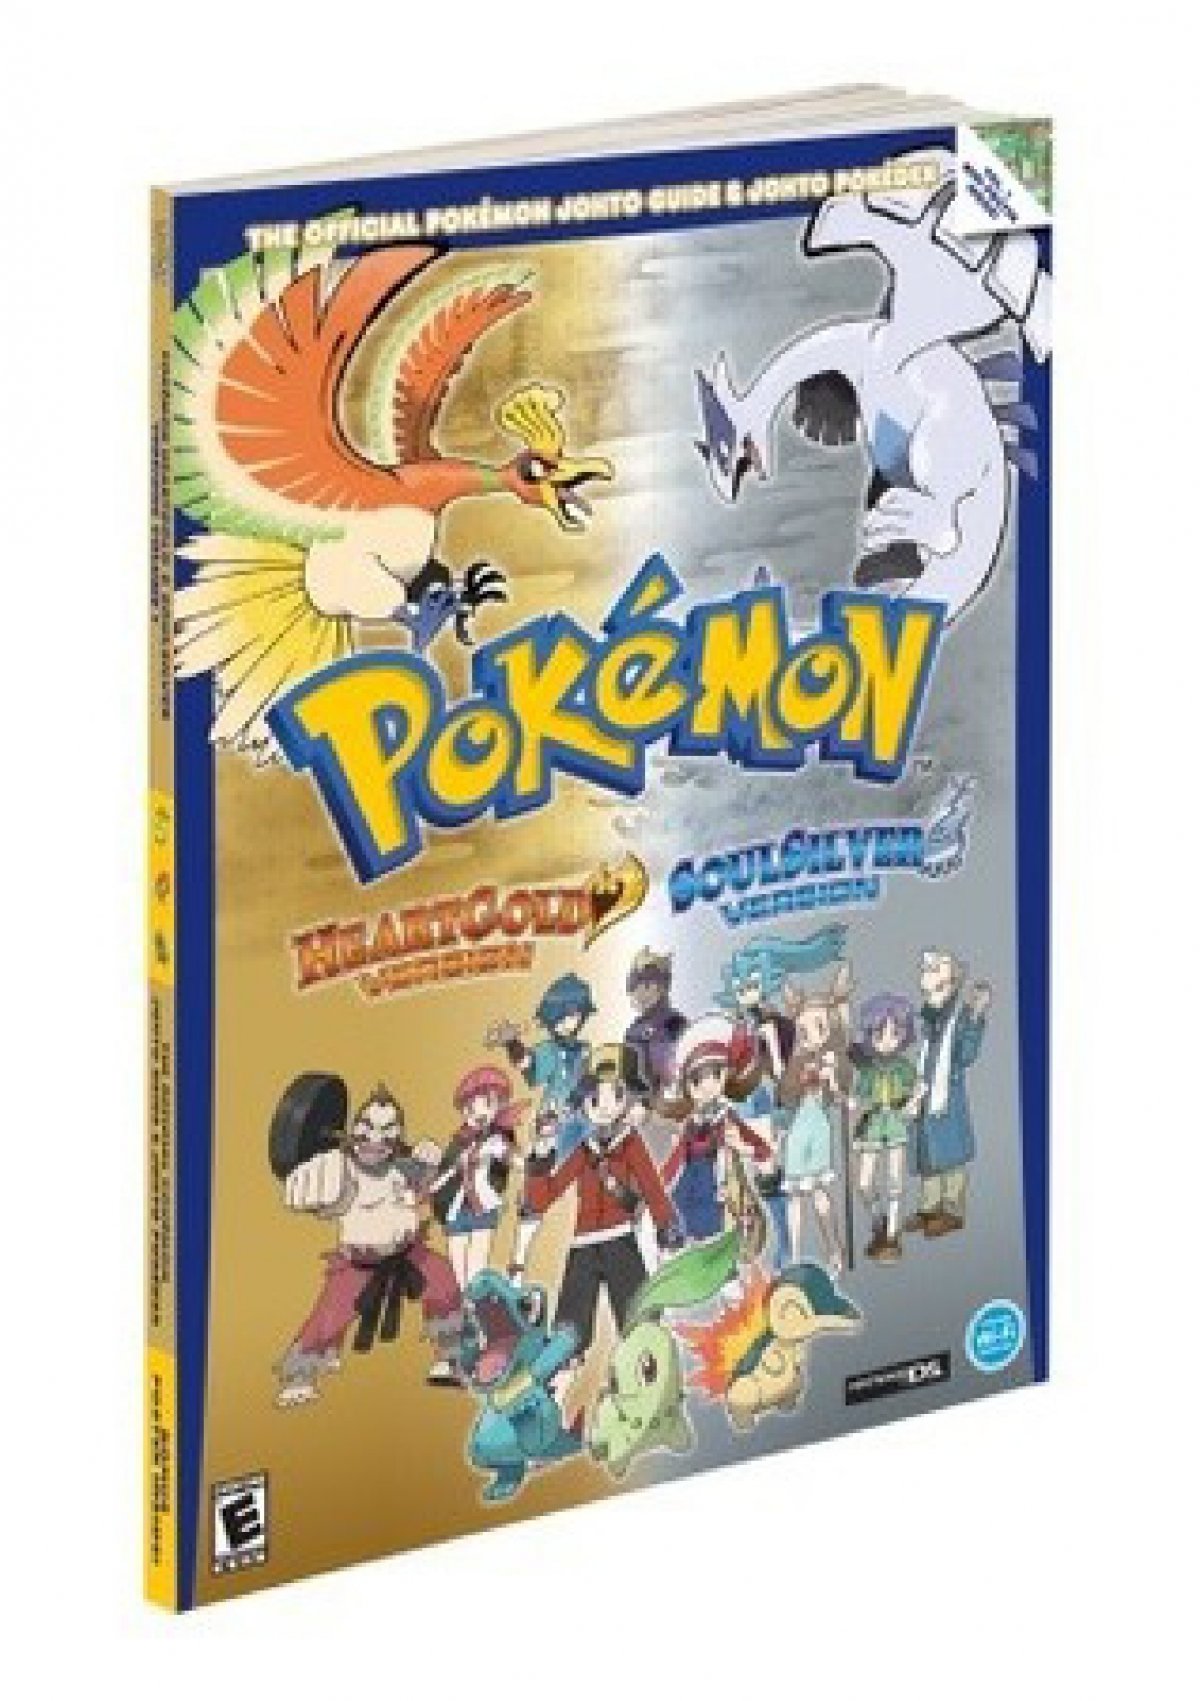 Pokemon Heartgold Version Case and Game Manual : Pokemon Company, Nintendo  : Free Download, Borrow, and Streaming : Internet Archive